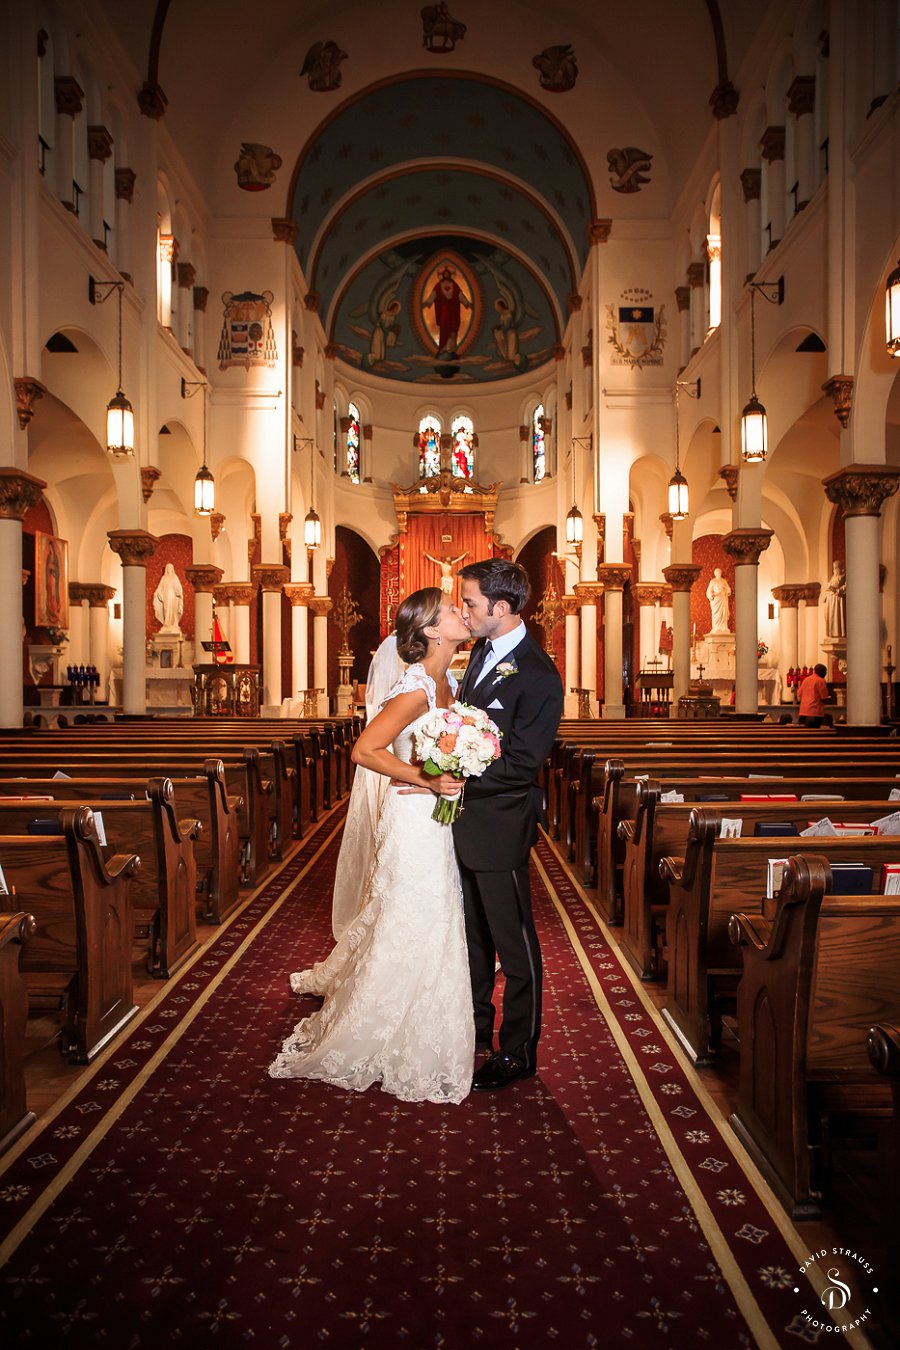 Atlanta Wedding Photography - Charleston Photographer David Strauss - Claire and Kyle - 16